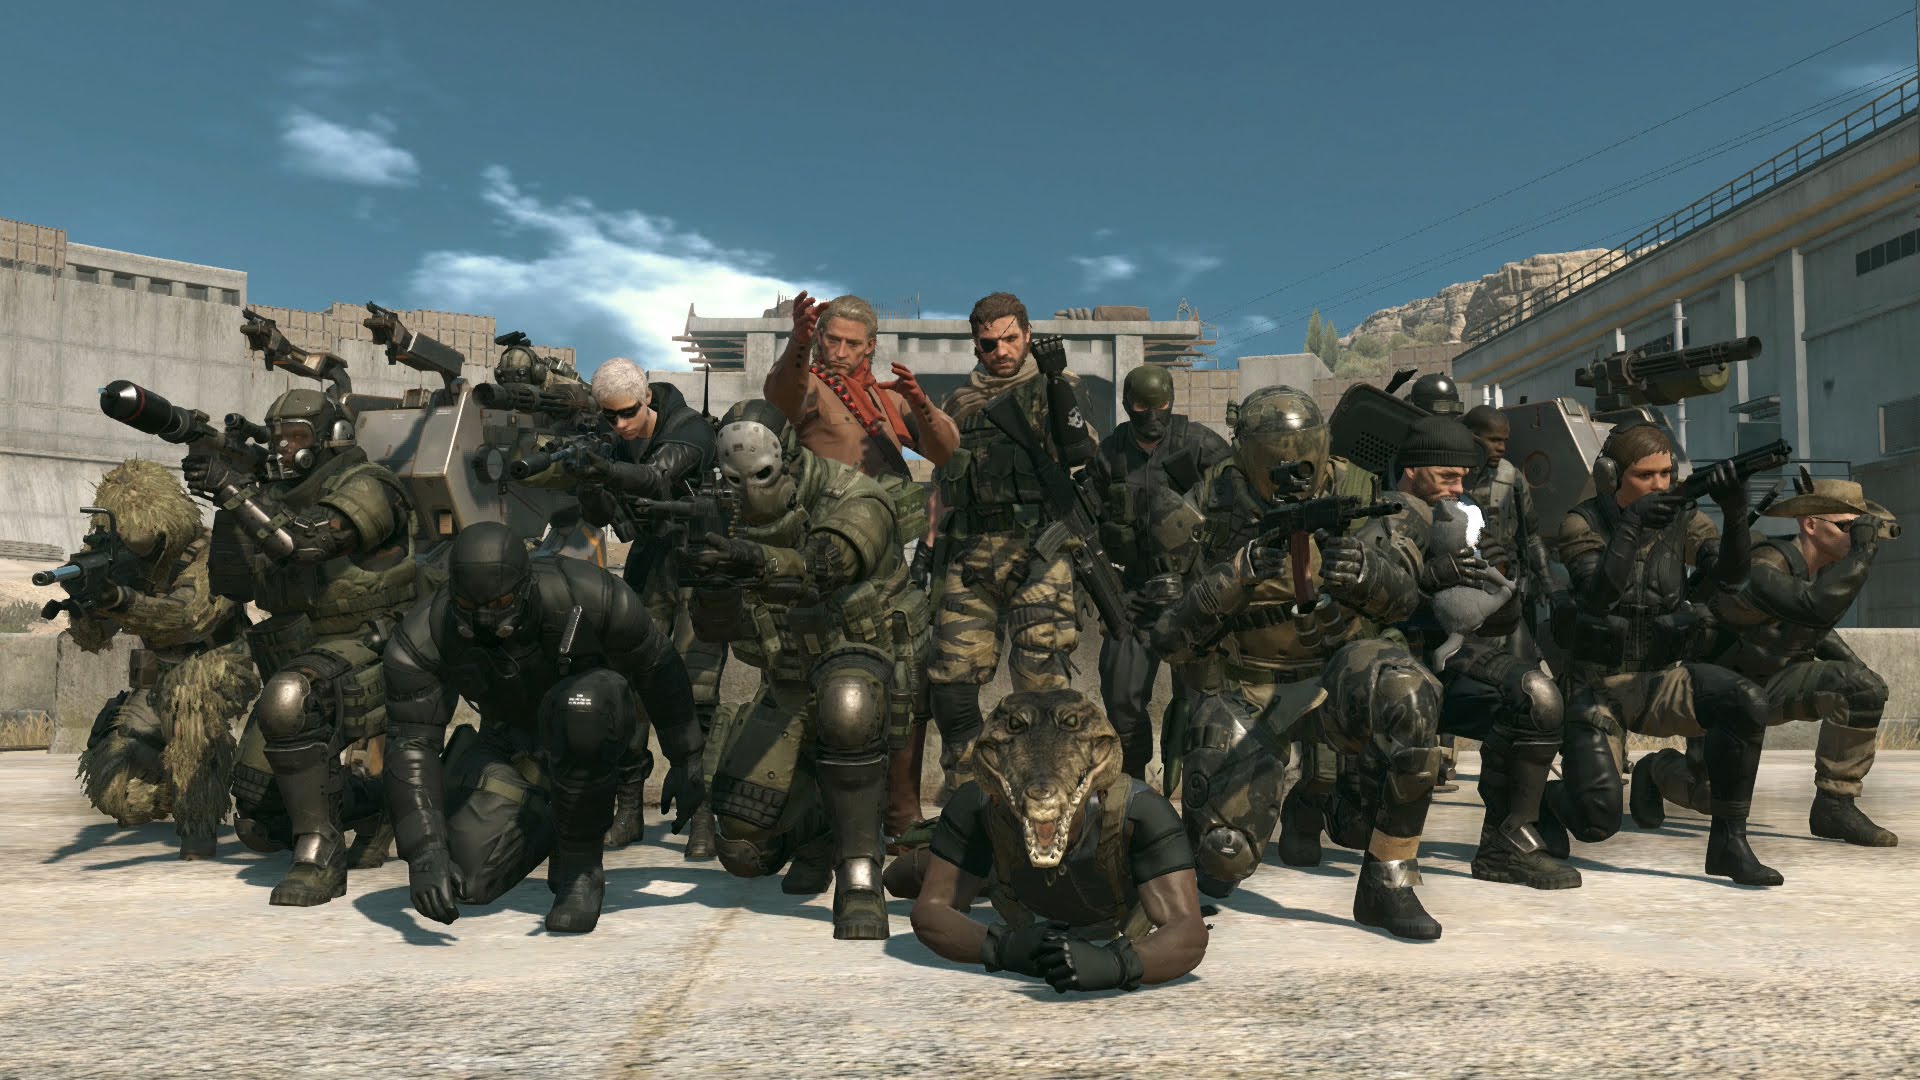 Metal Gear Online Backgrounds on Wallpapers Vista